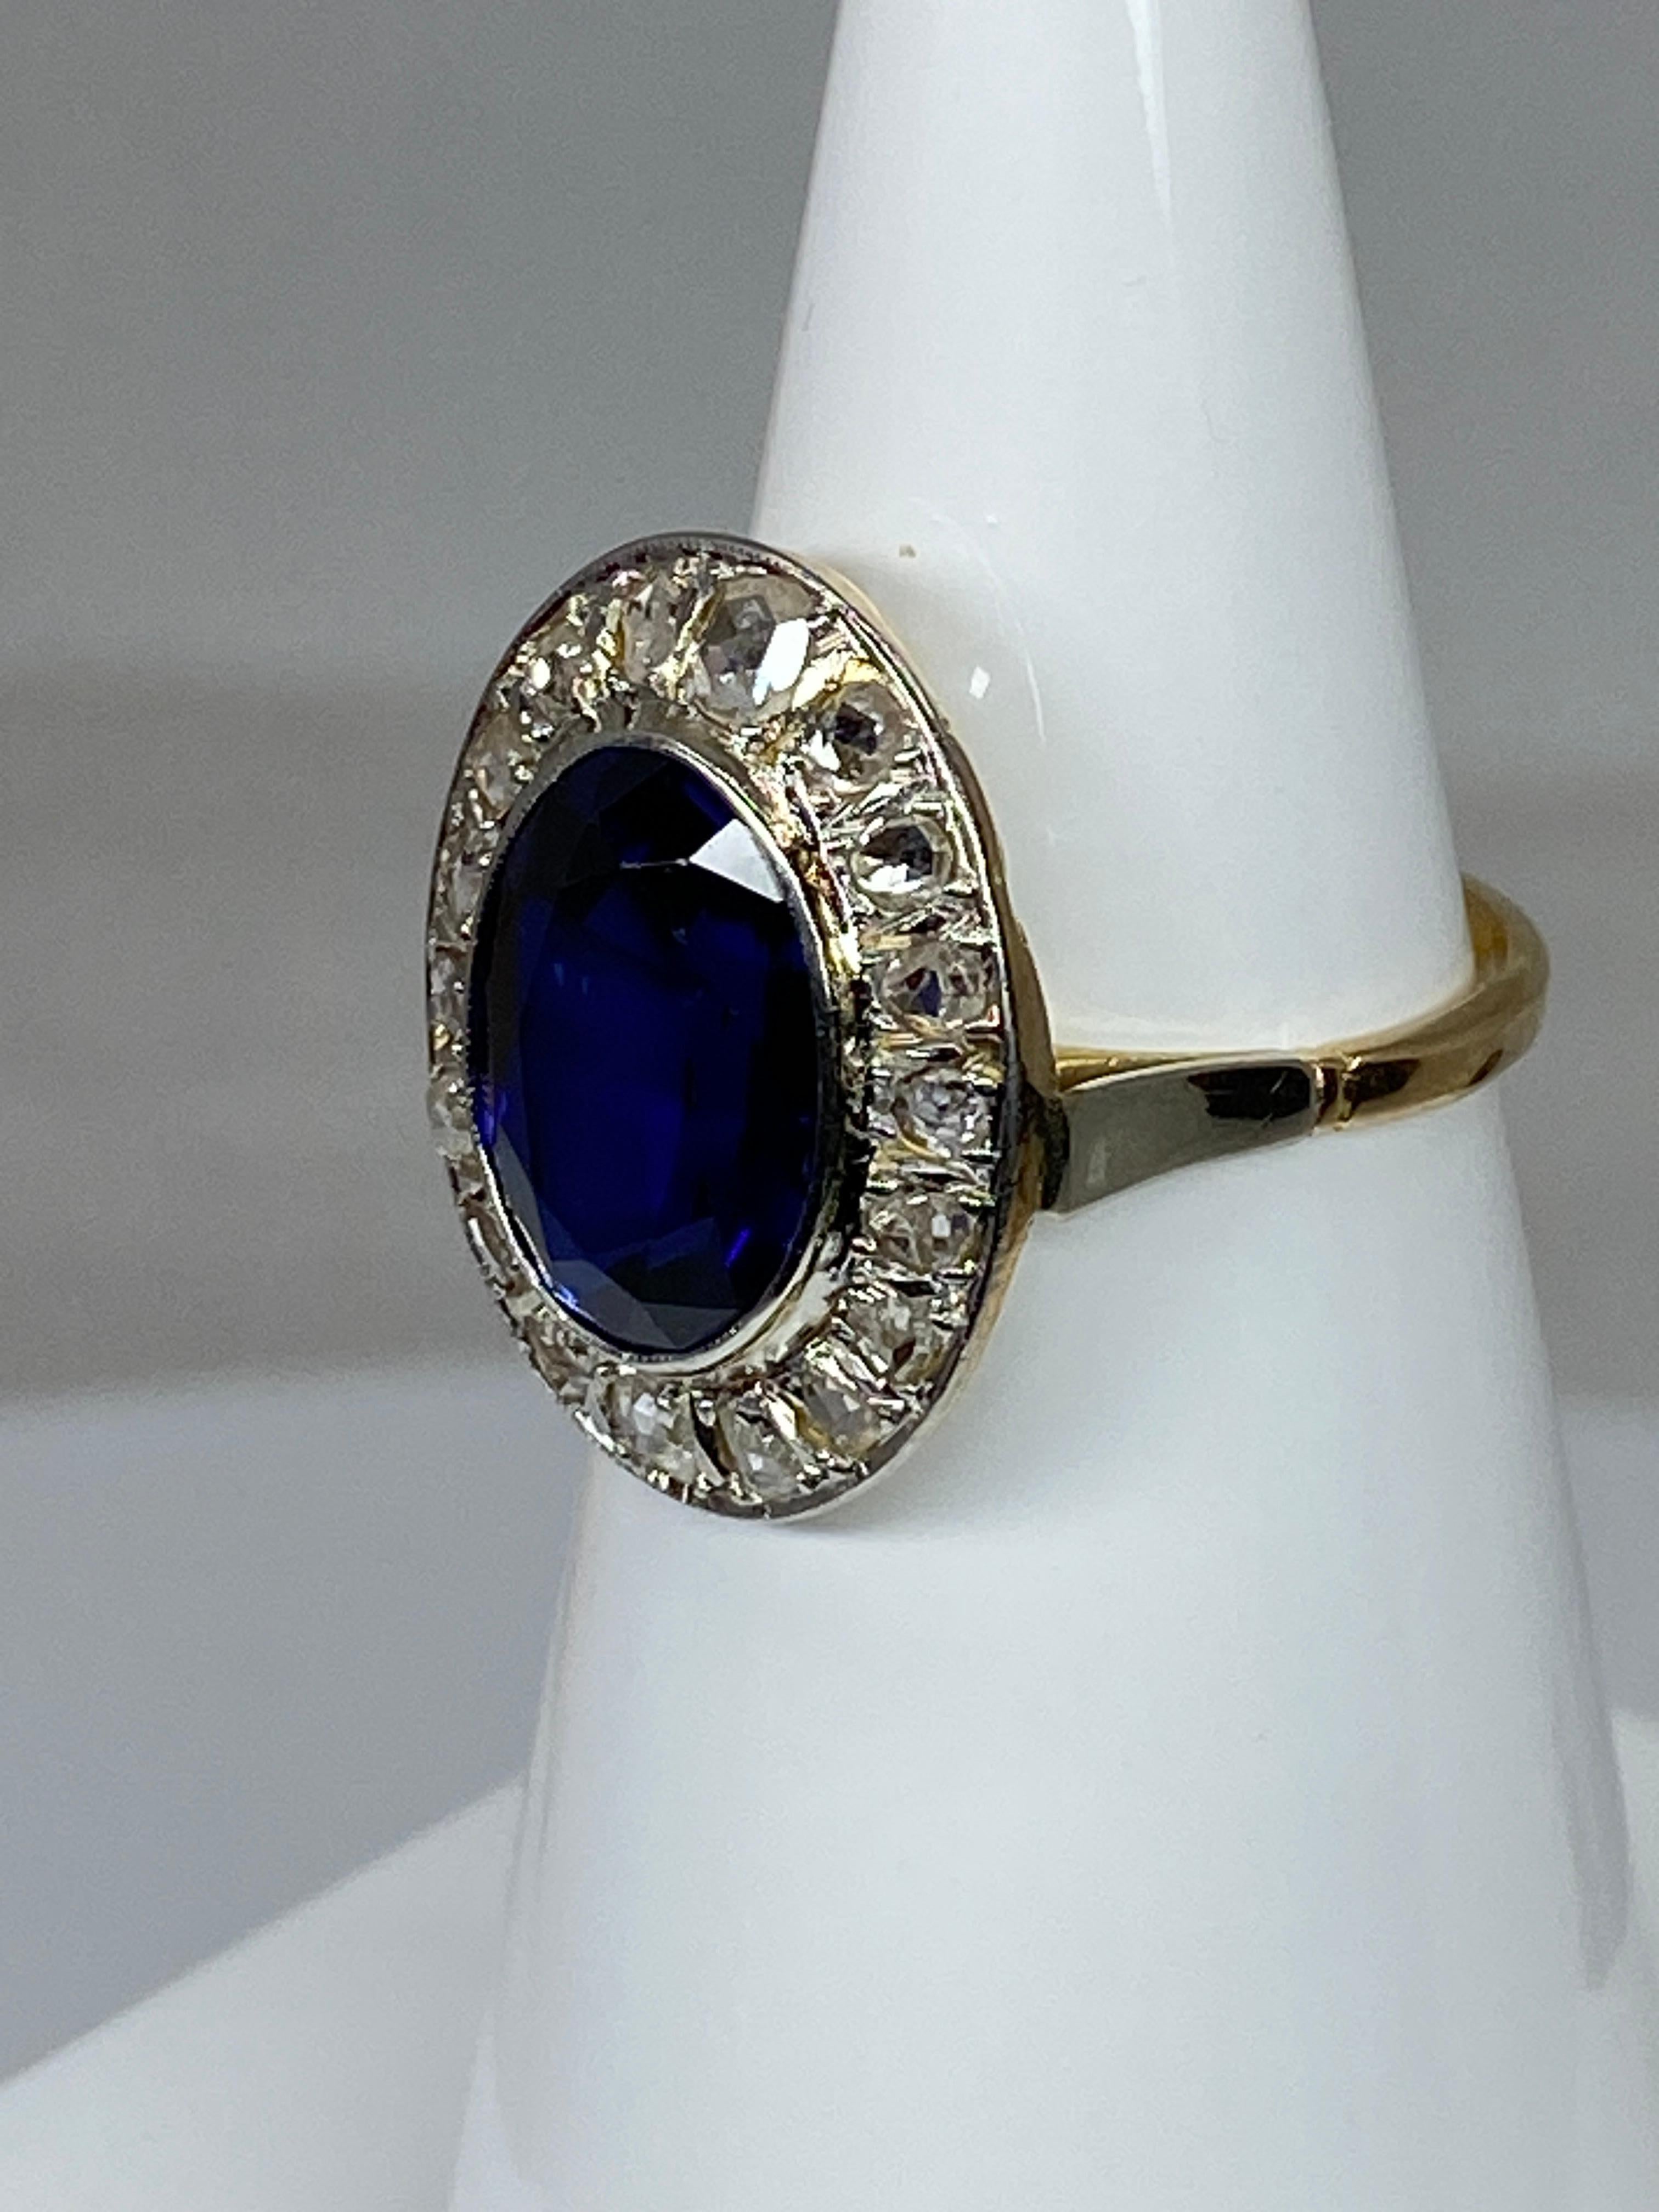 Rose Cut 18 Carat Gold Ring Verneuil Sapphire and Rose-Cut Diamonds, 1900 Period